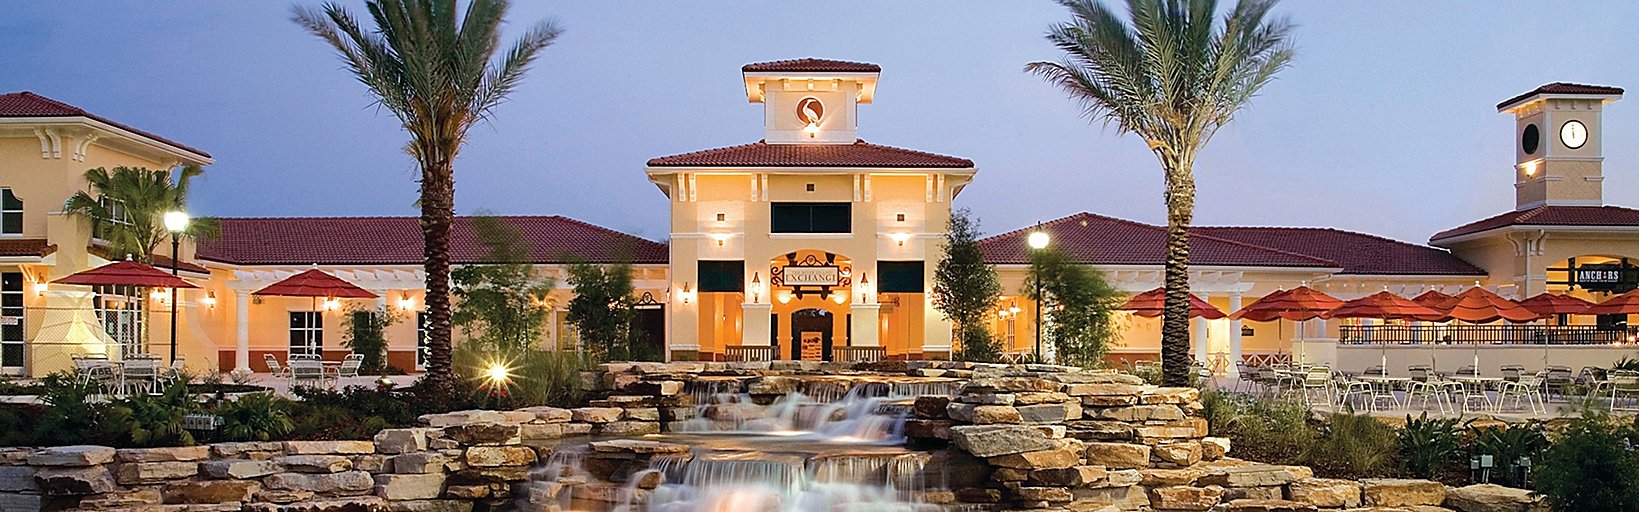 Orlando Hotels With Pools Near Kissimmee, FL | Holiday Inn Club Vacation At  Orange Lake Resort